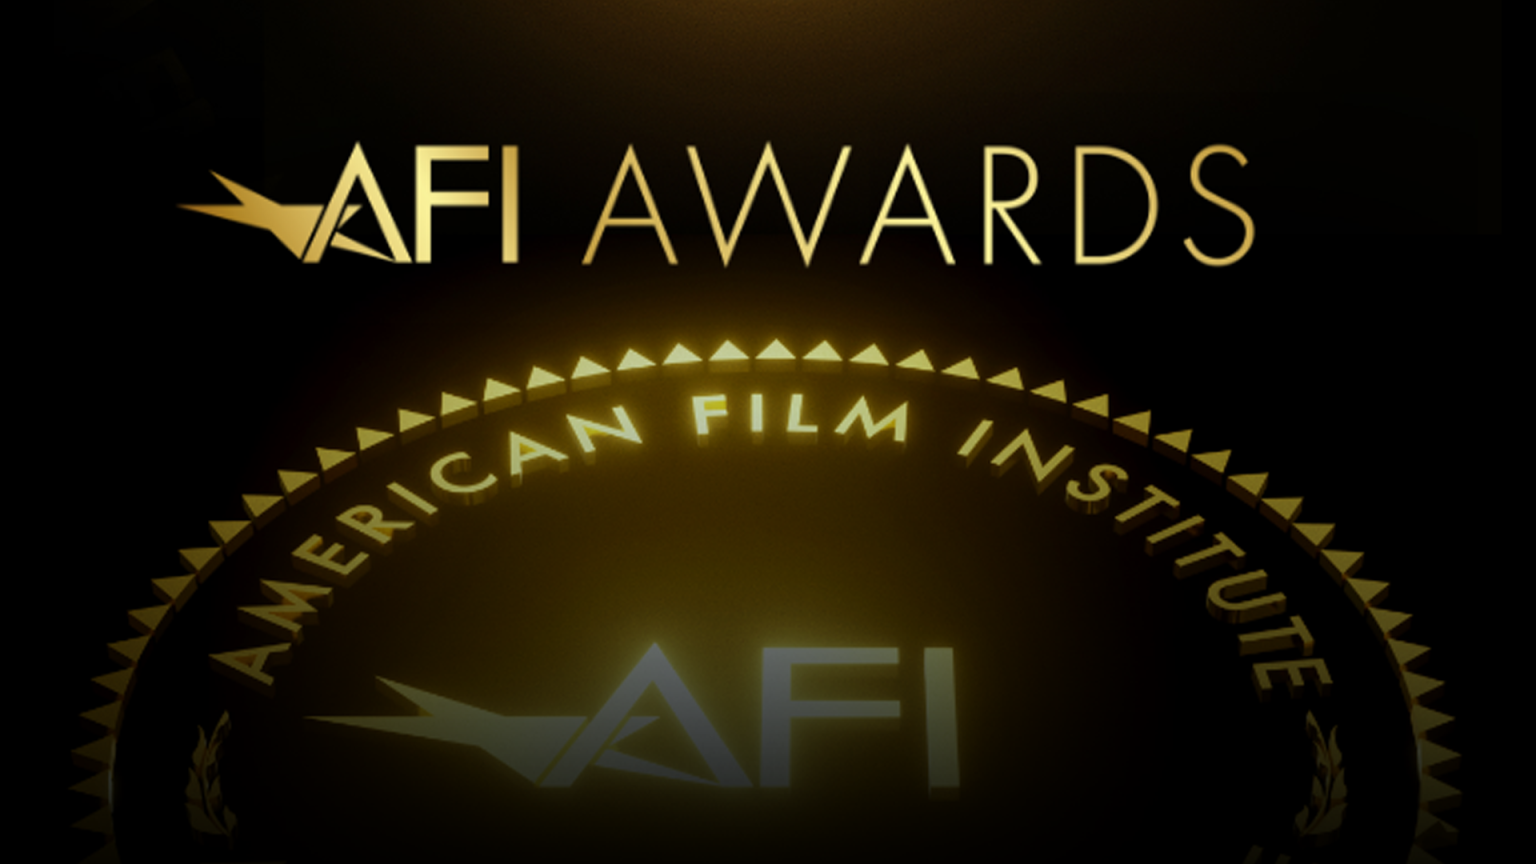 AFI AWARDS 2021 To Take Place In January LATF USA NEWS